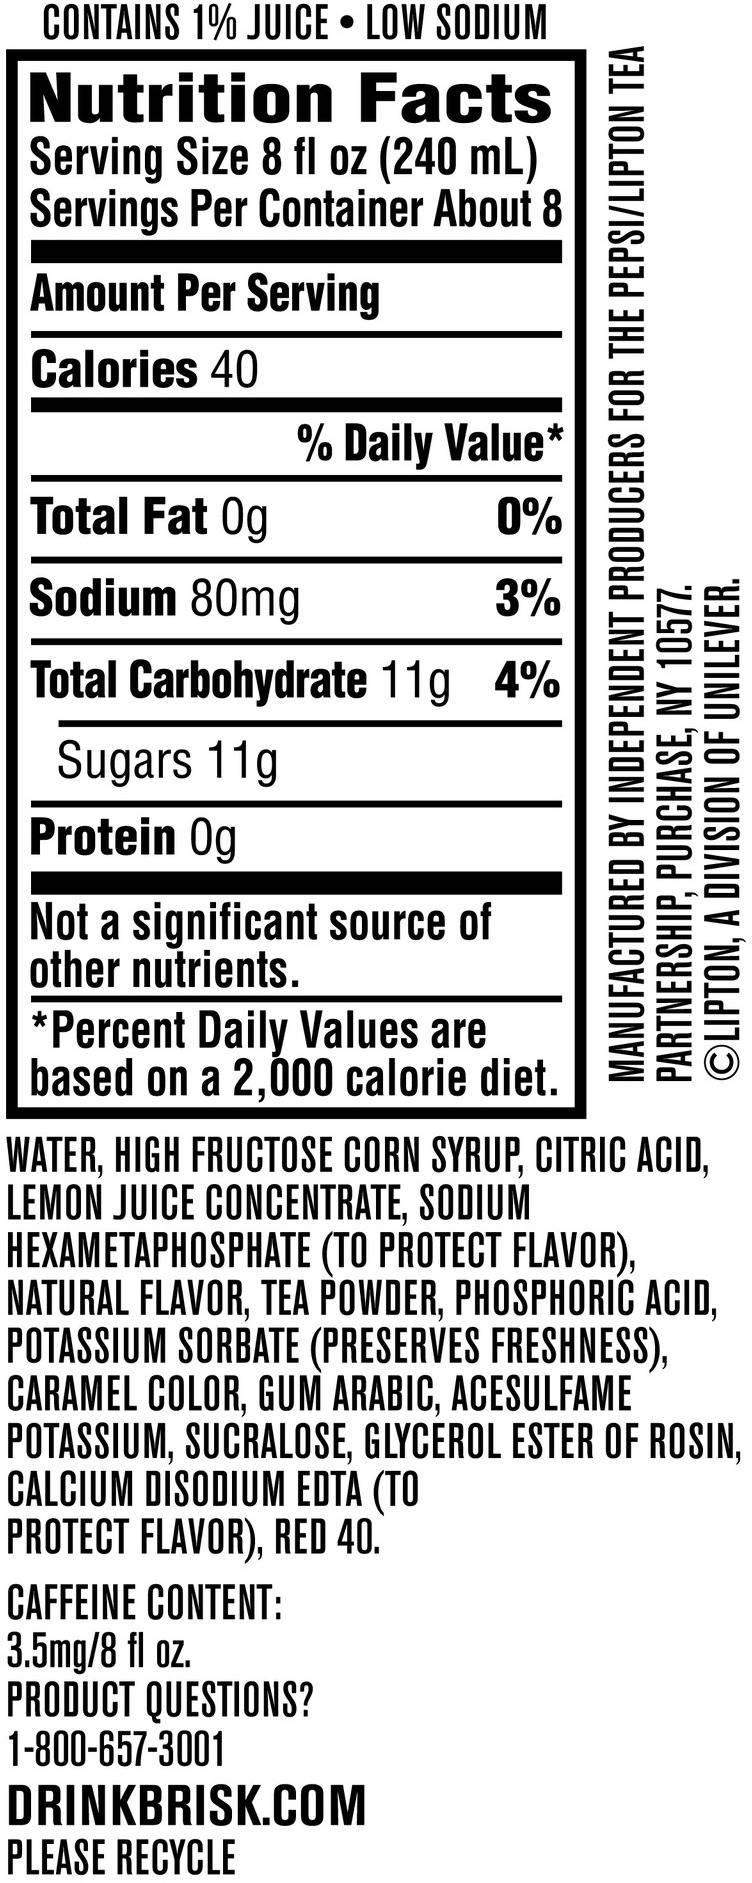 Image describing nutrition information for product Brisk Iced Tea + Lemonade